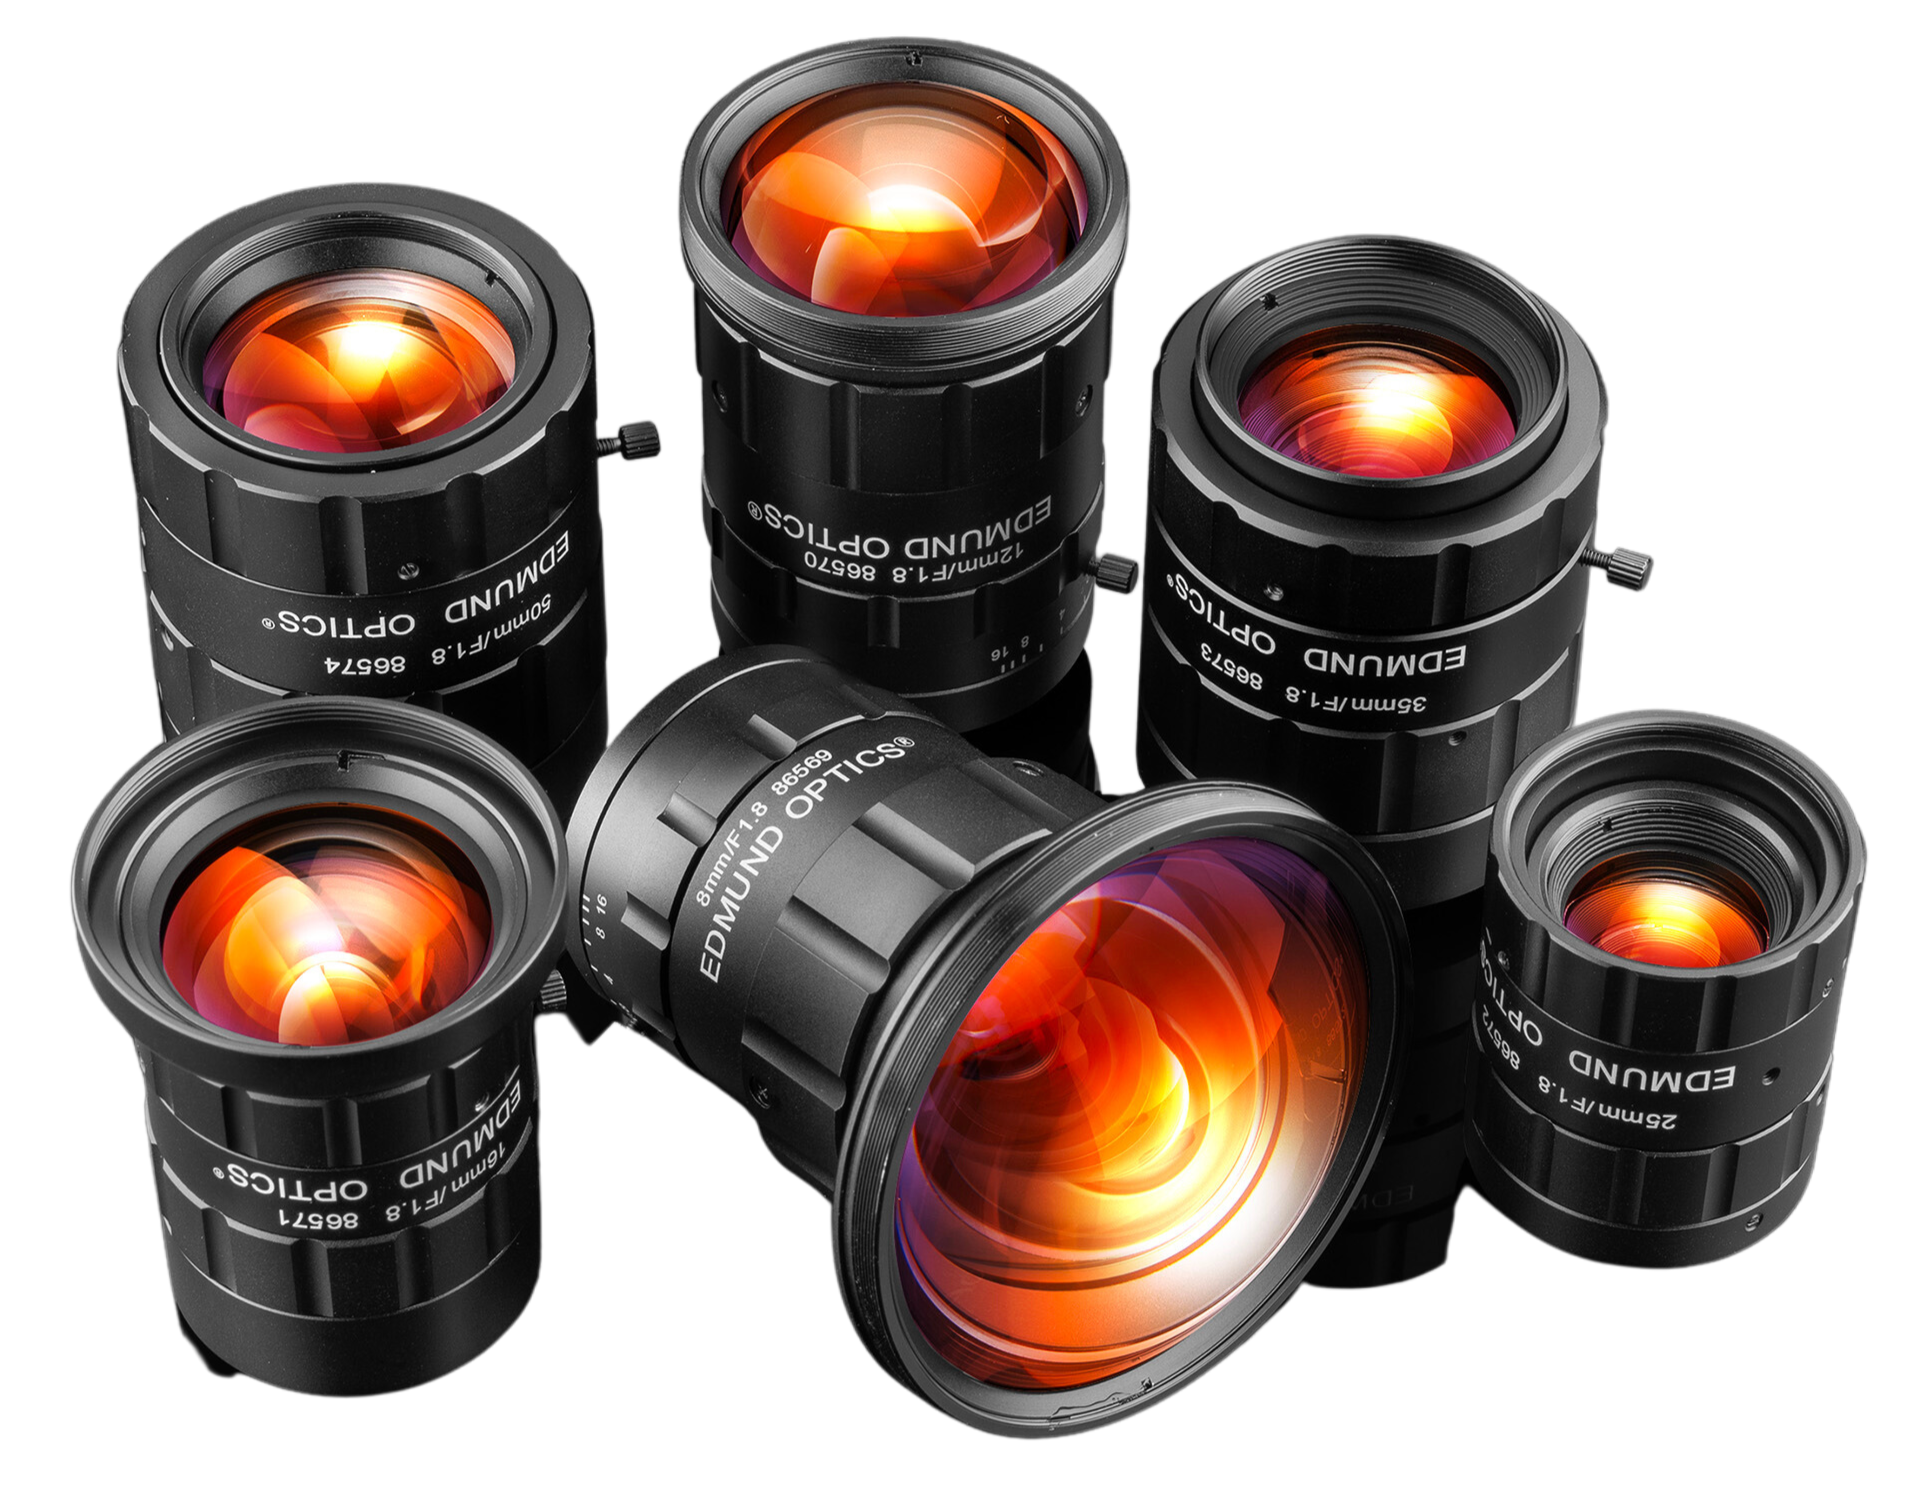 FA Lens, Fixed Focal Length Lenses